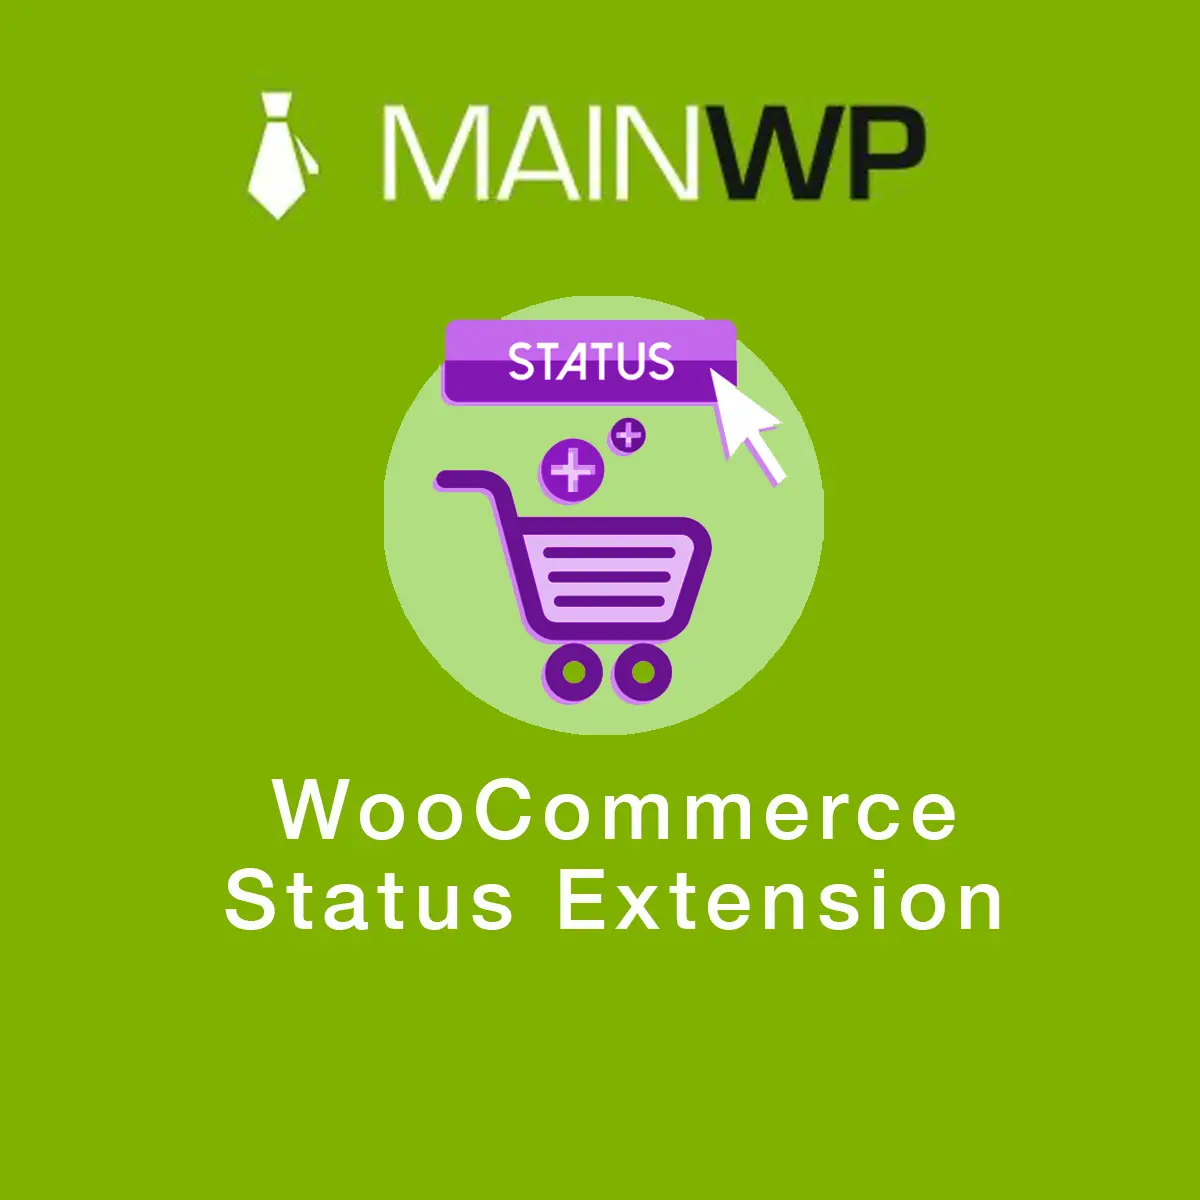 افزونه MainWP WooCommerce Status